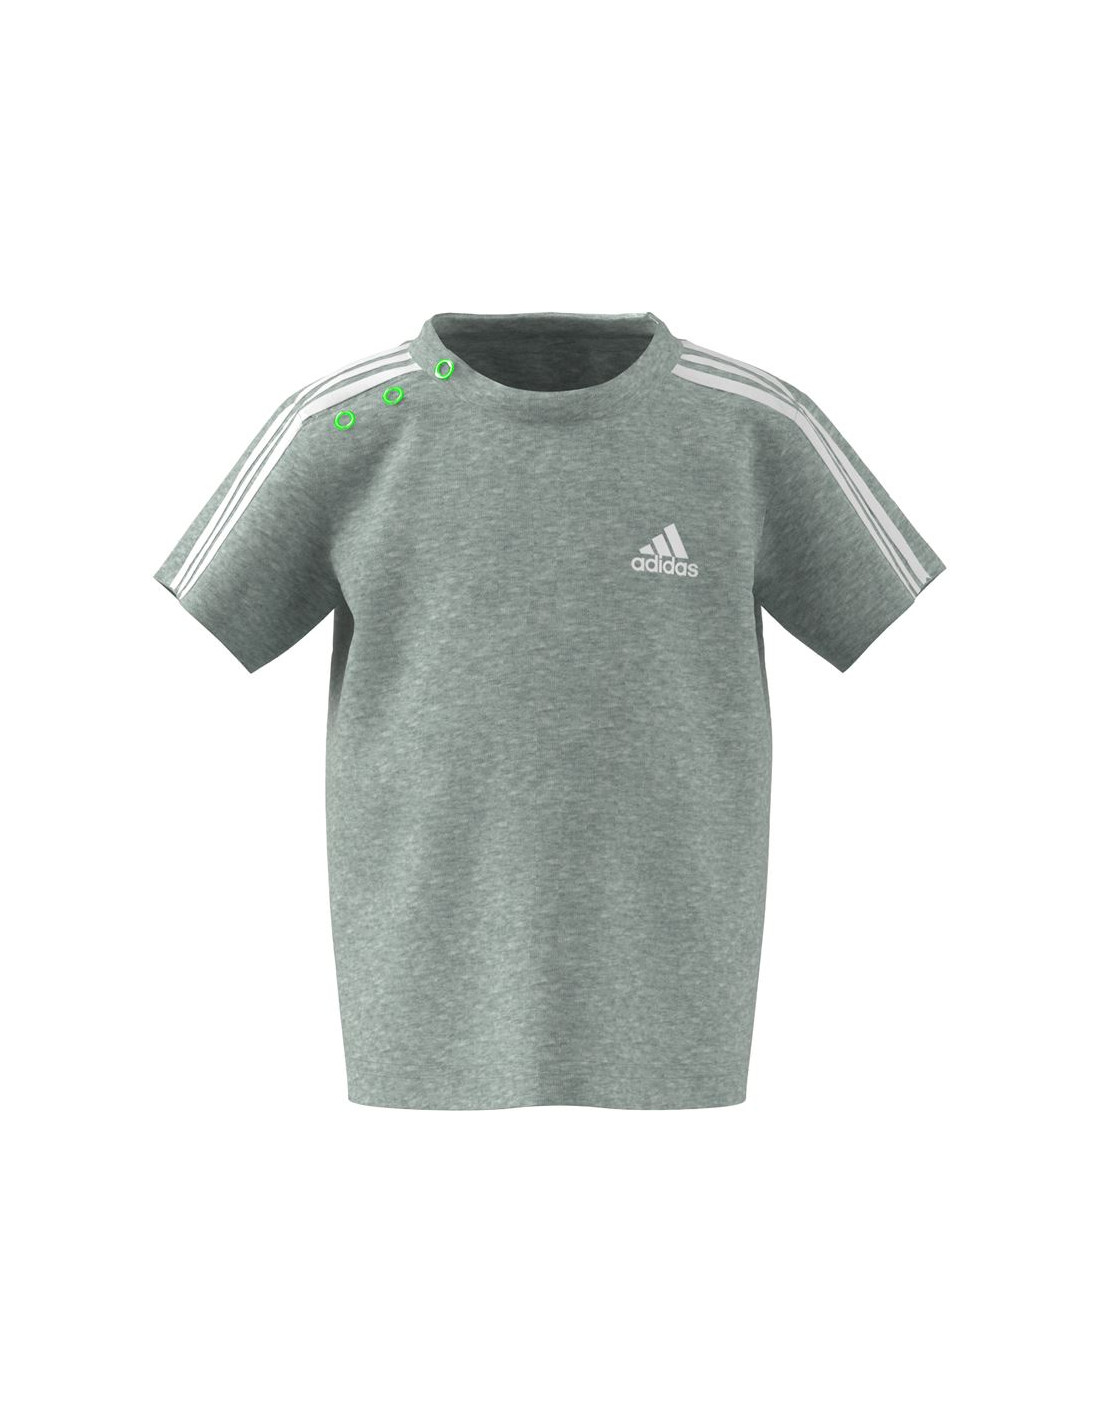 Camiseta adidas ib 3s niño grey